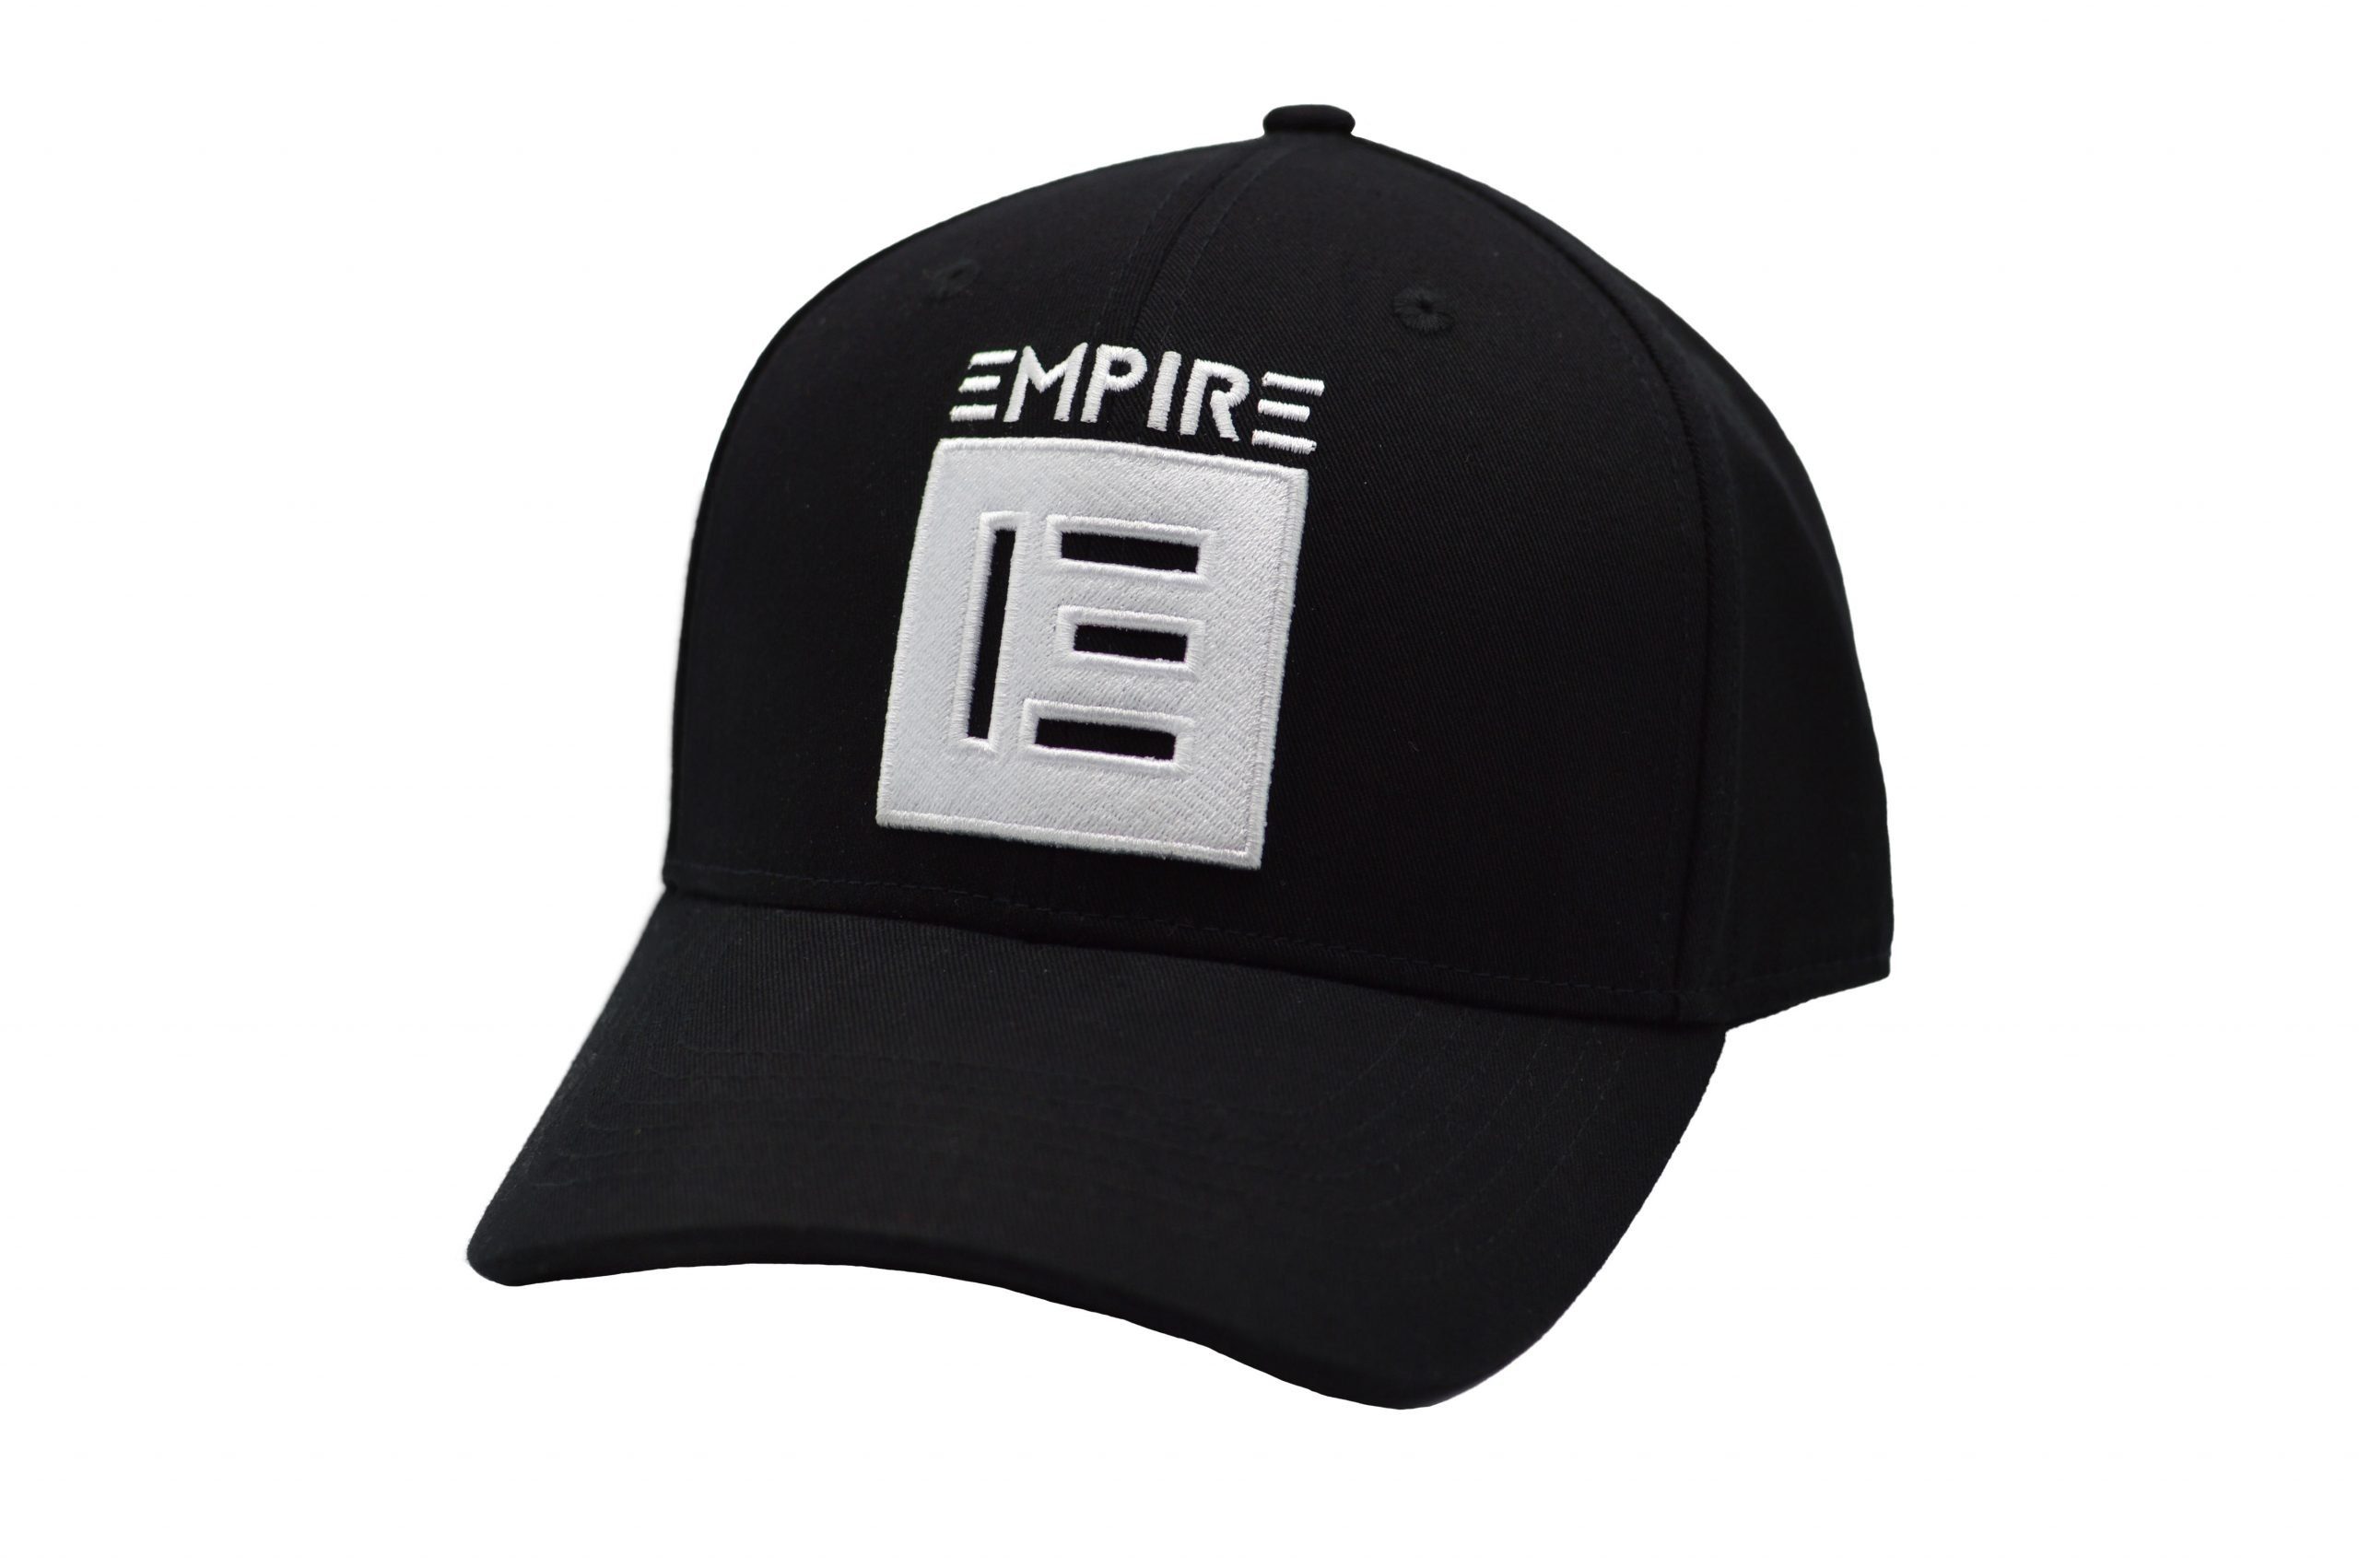 EMPIRE-THIRTEEN Baseball Cap "EMPIRE" CAP black and white